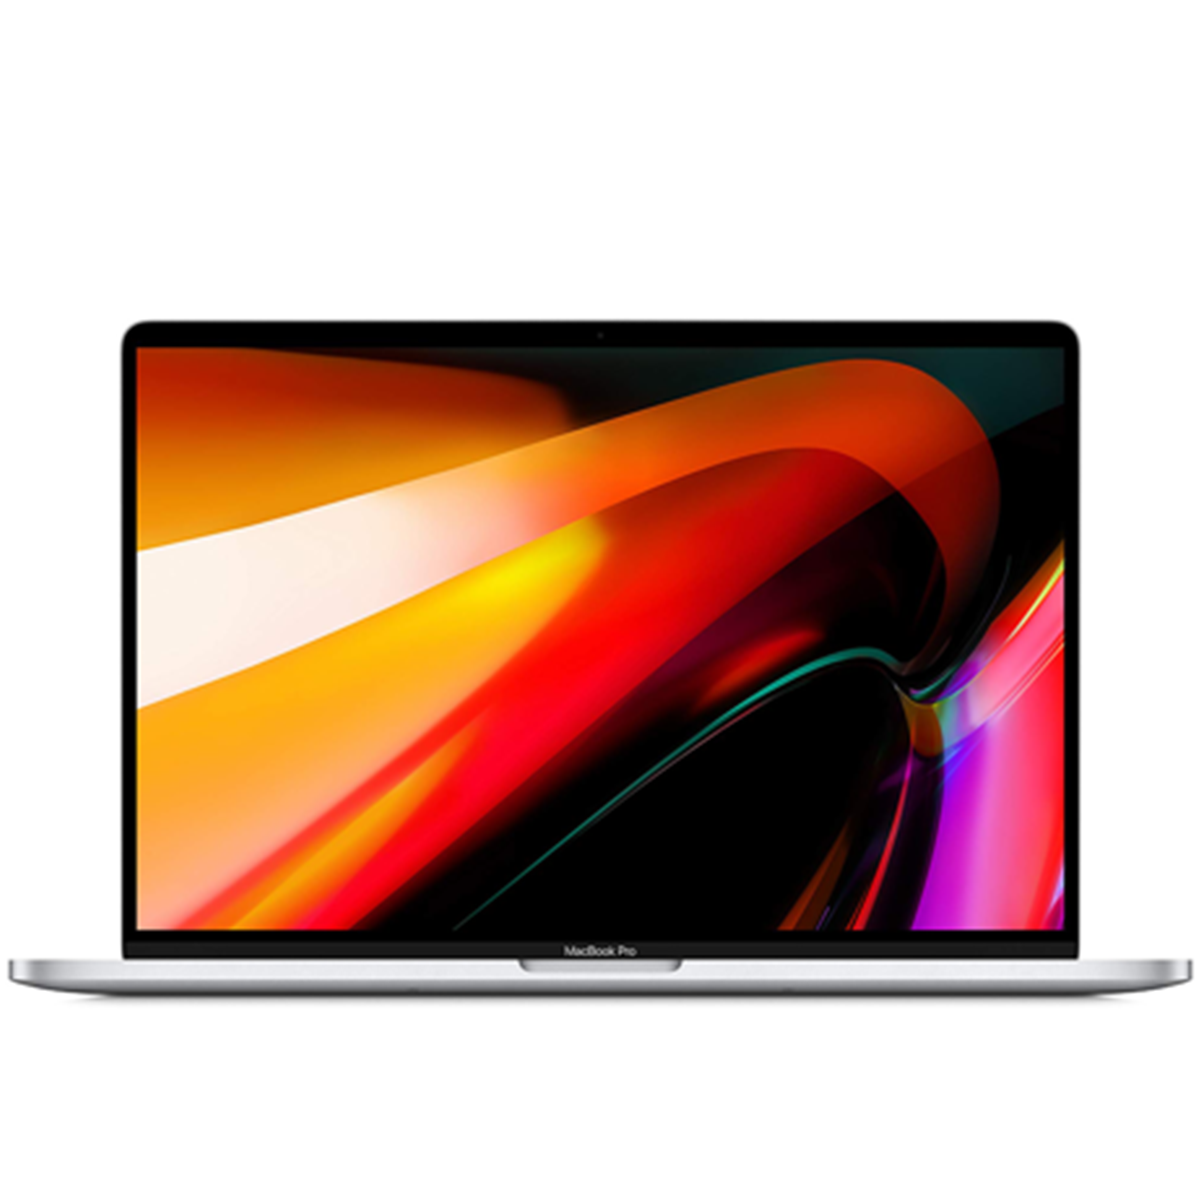  MacBook Pro 16 inch 2019 TouchBar 2.3GHz Core i9 